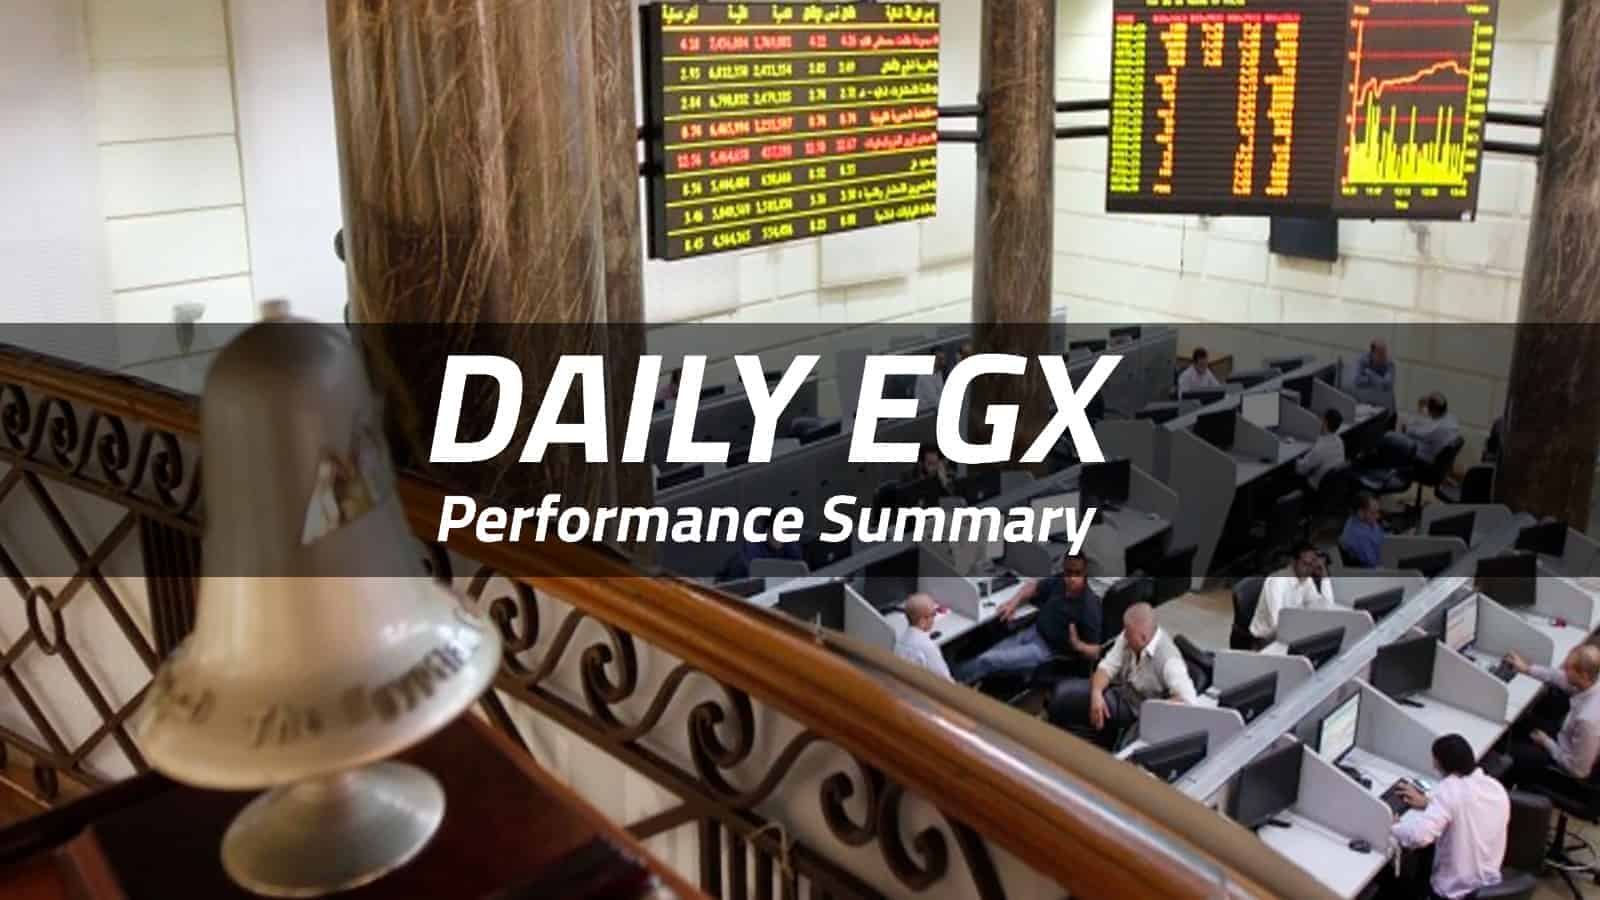 EGX sees upward trend on Wednesday